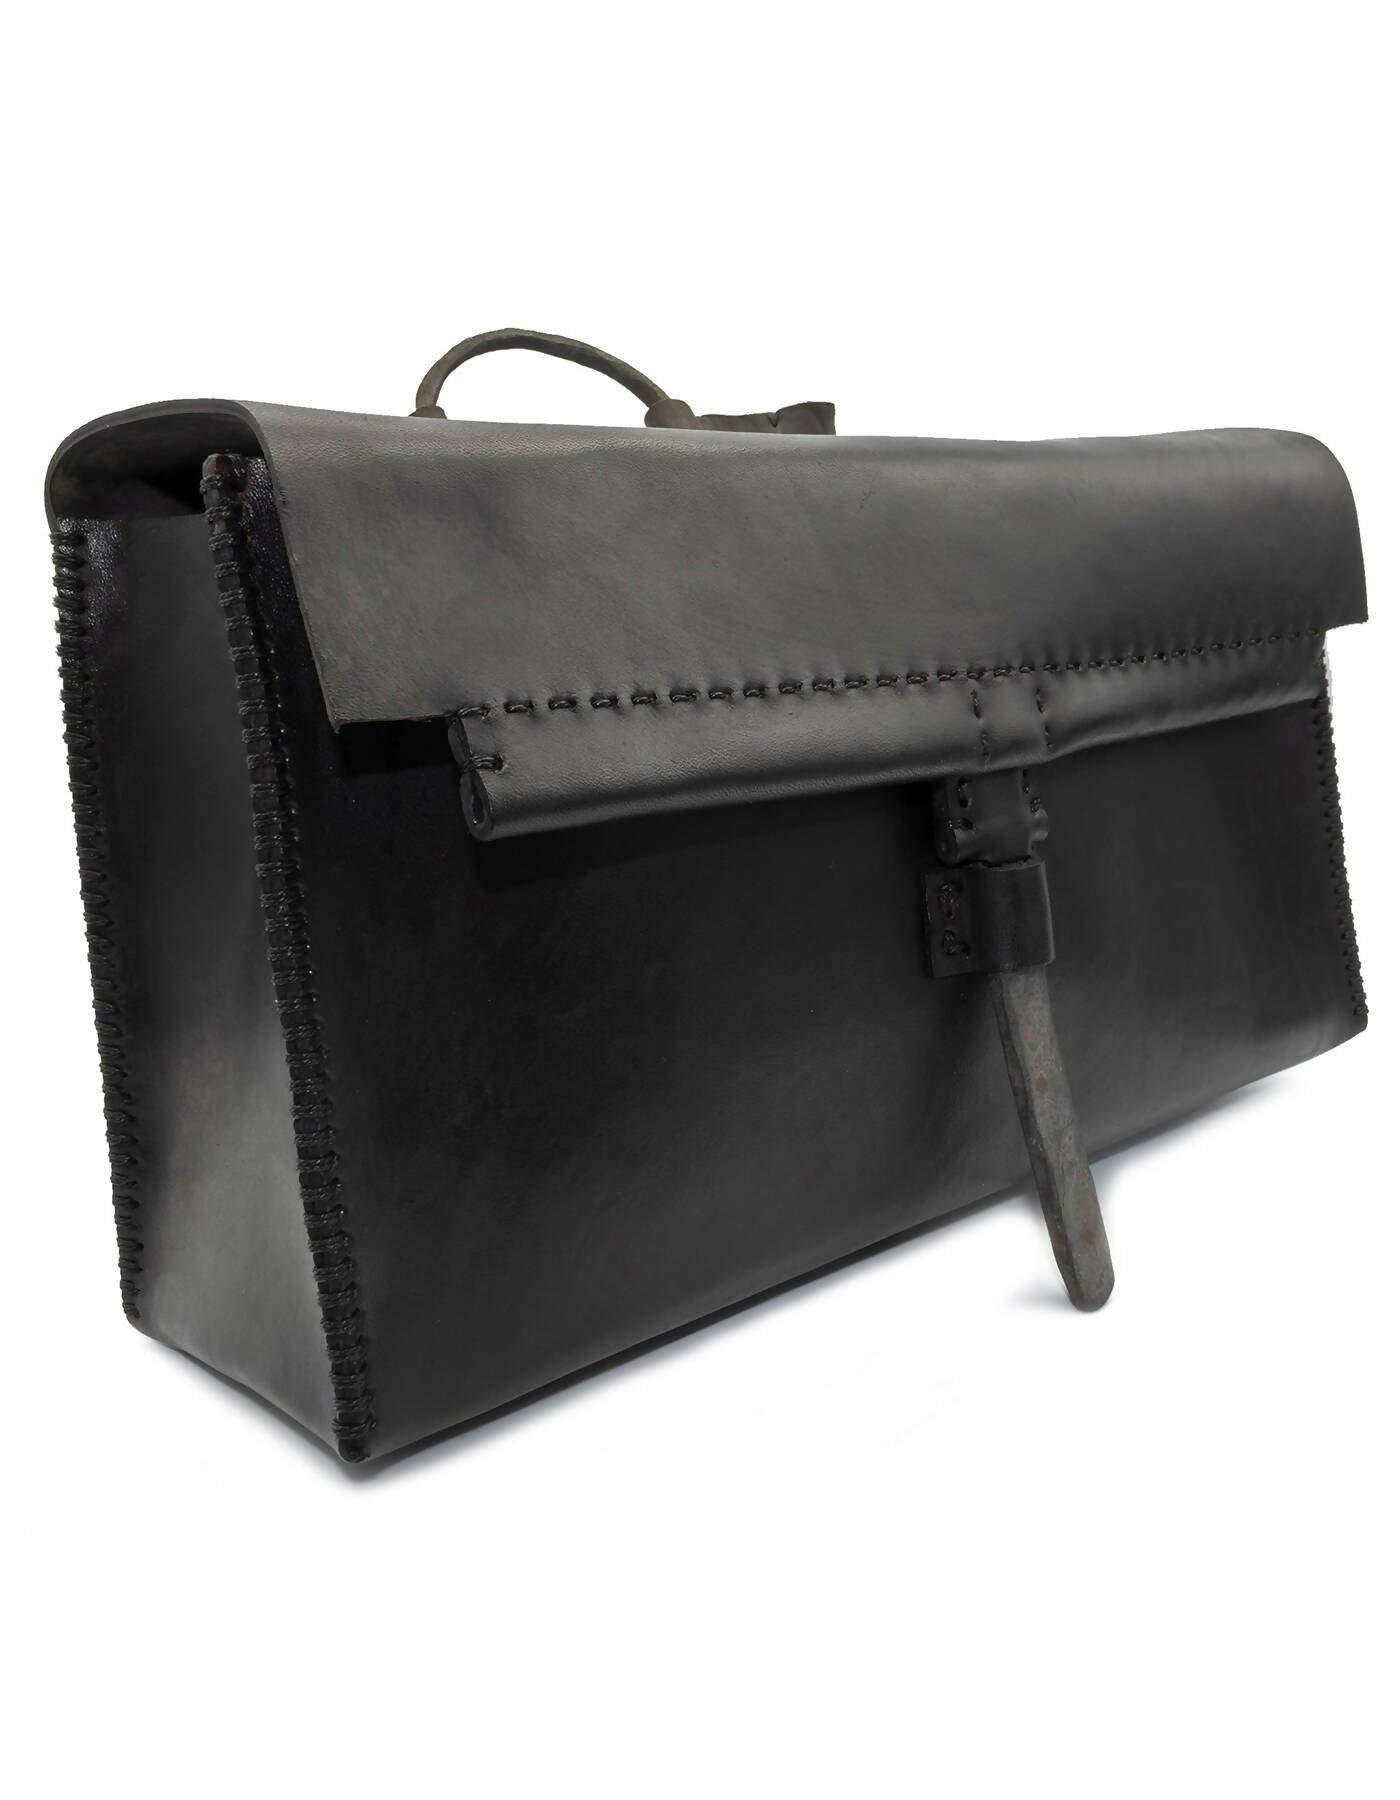 one piece culatta leather shoulder bag by ATELIER SKN